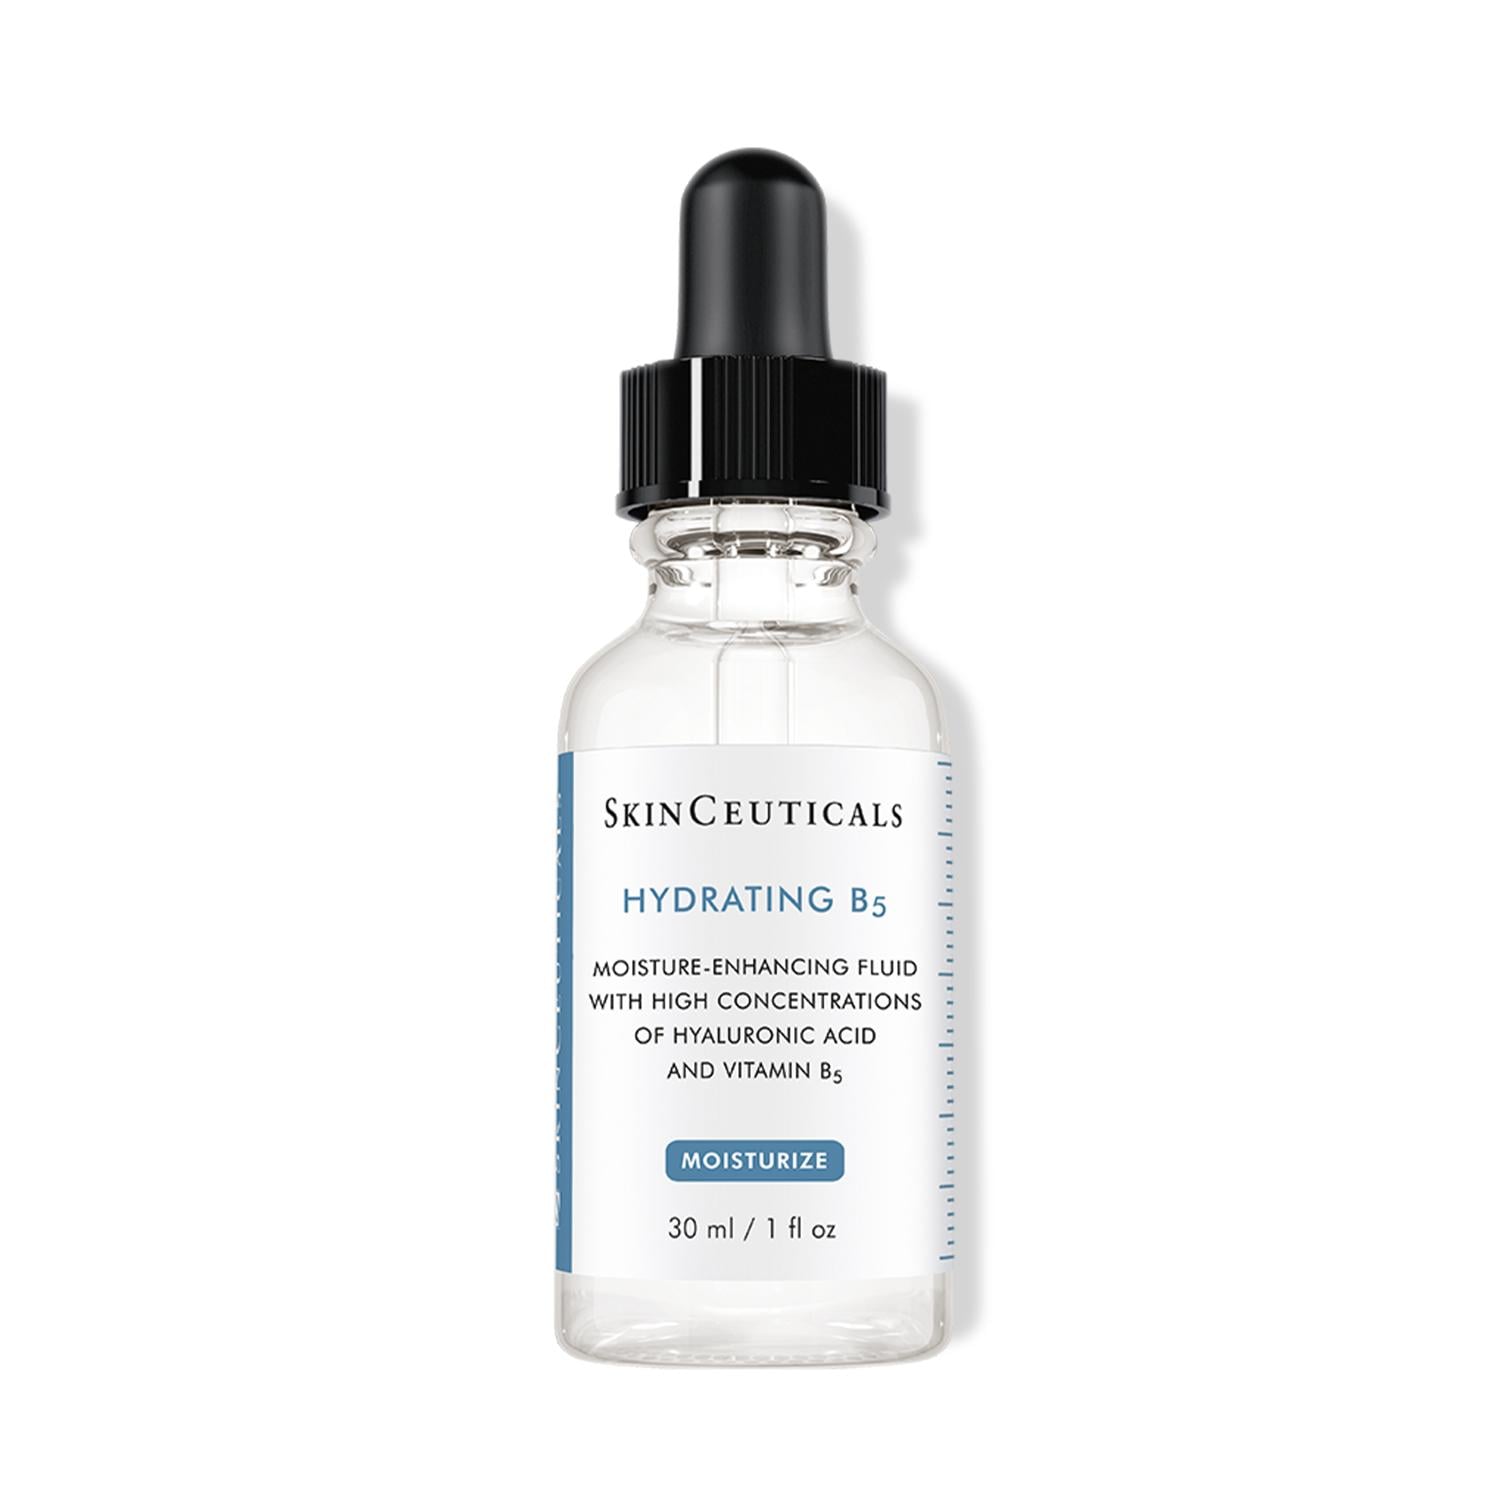 SkinCeuticals Sensible Haut Hydrating B5